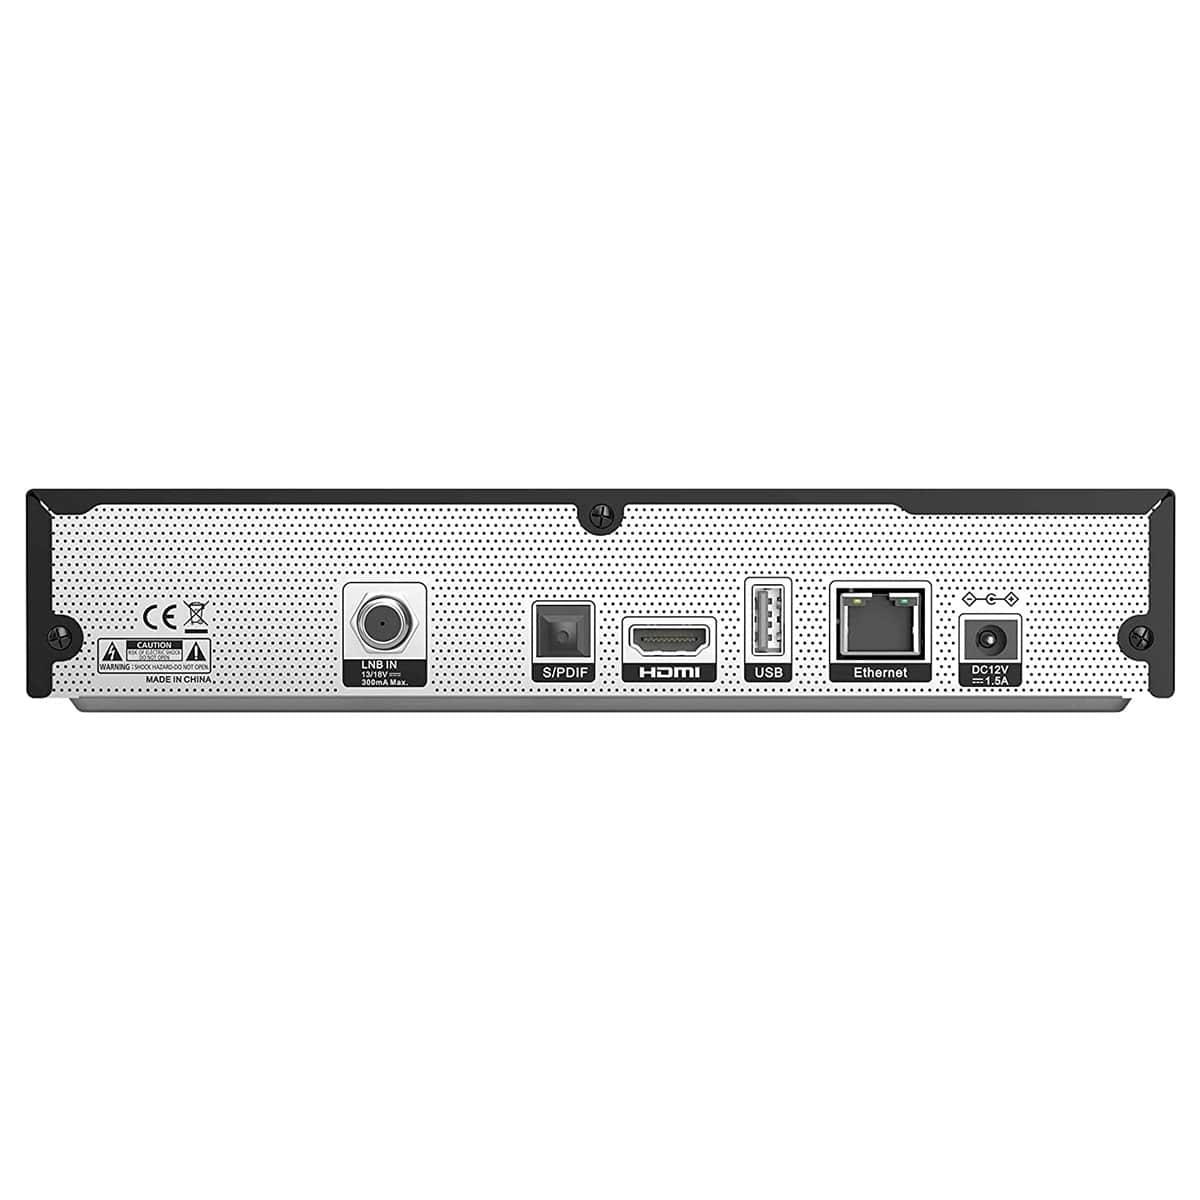 Comag SL65 UHD HD+ Sat Receiver inkl. 6 Monate HD Plus (4K UHD, DVB-S2, HDMI, USB 3.0, Schwarz)